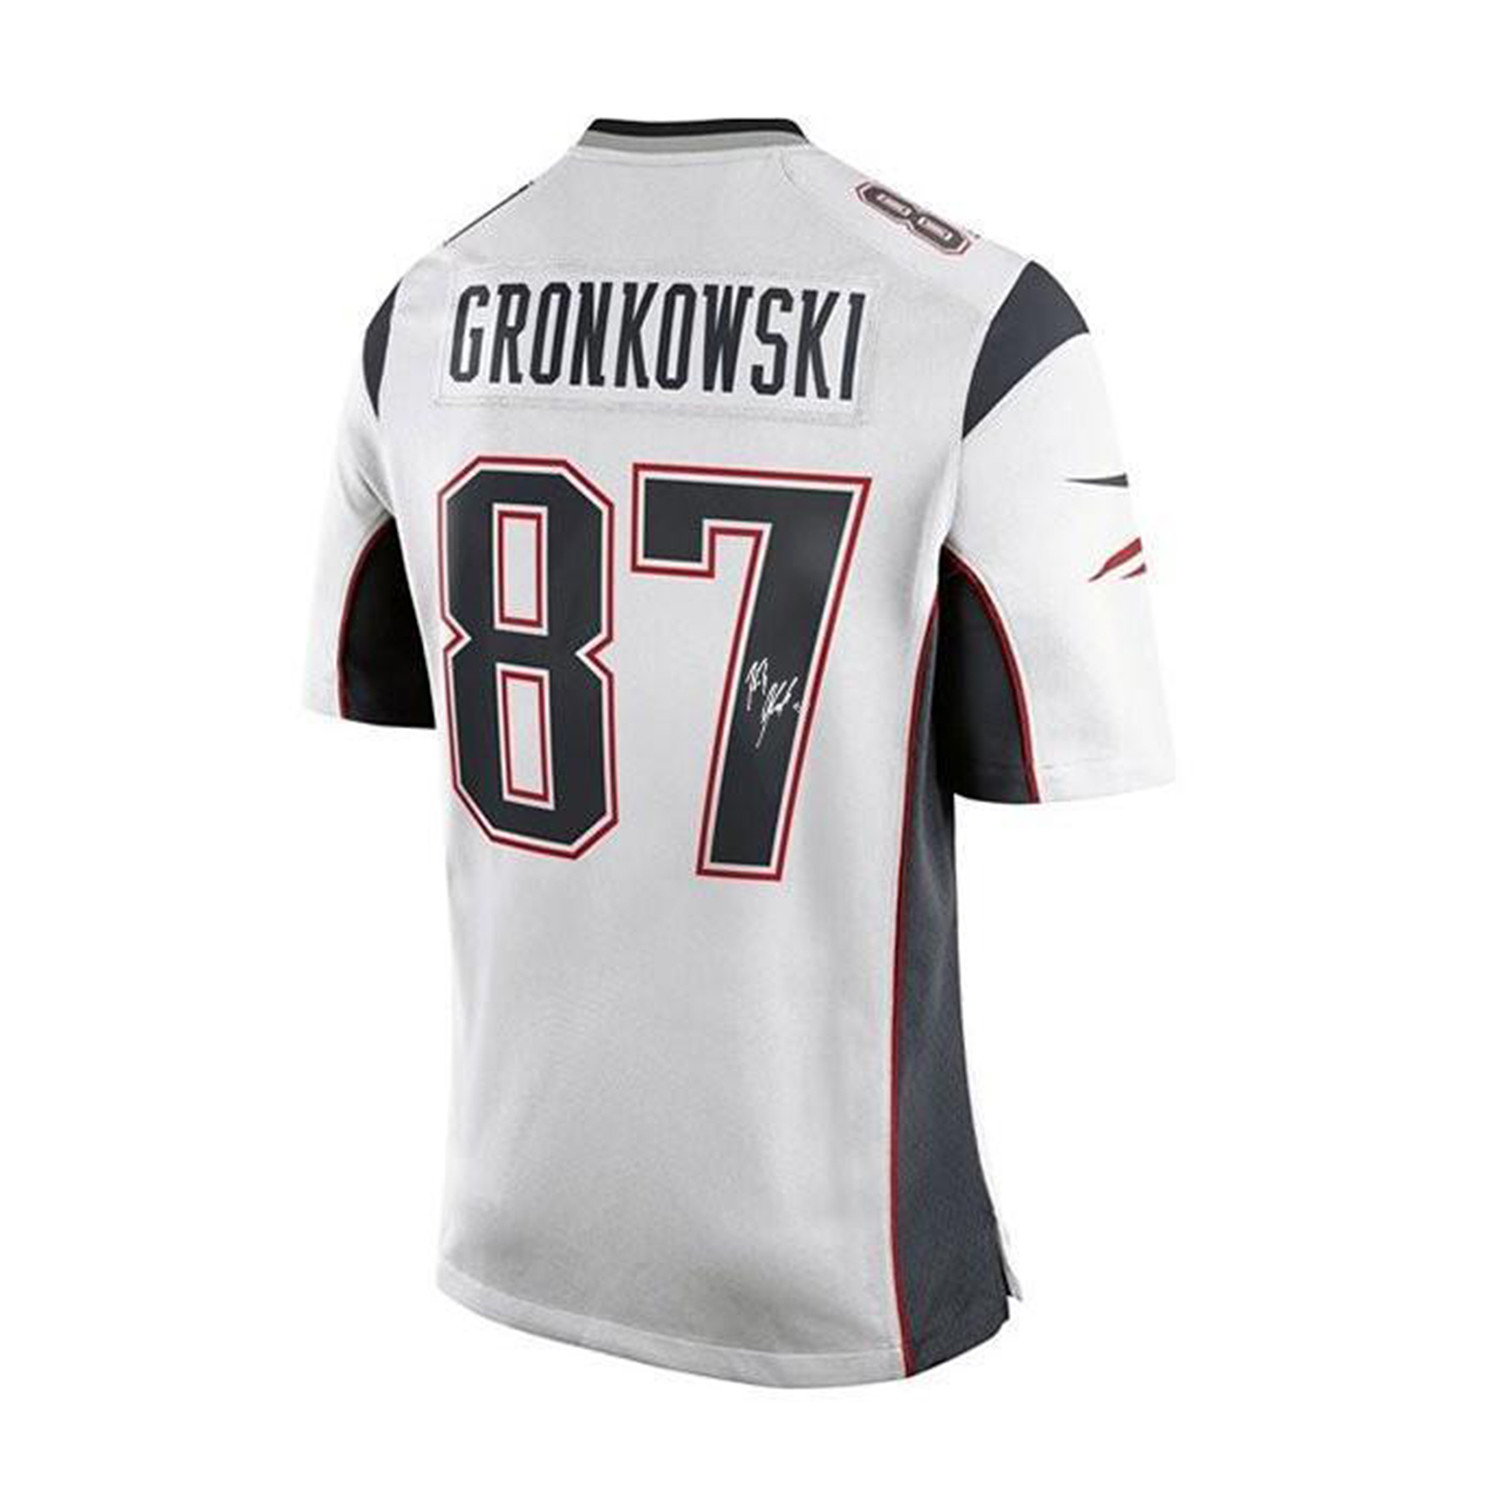 gronkowski replica jersey